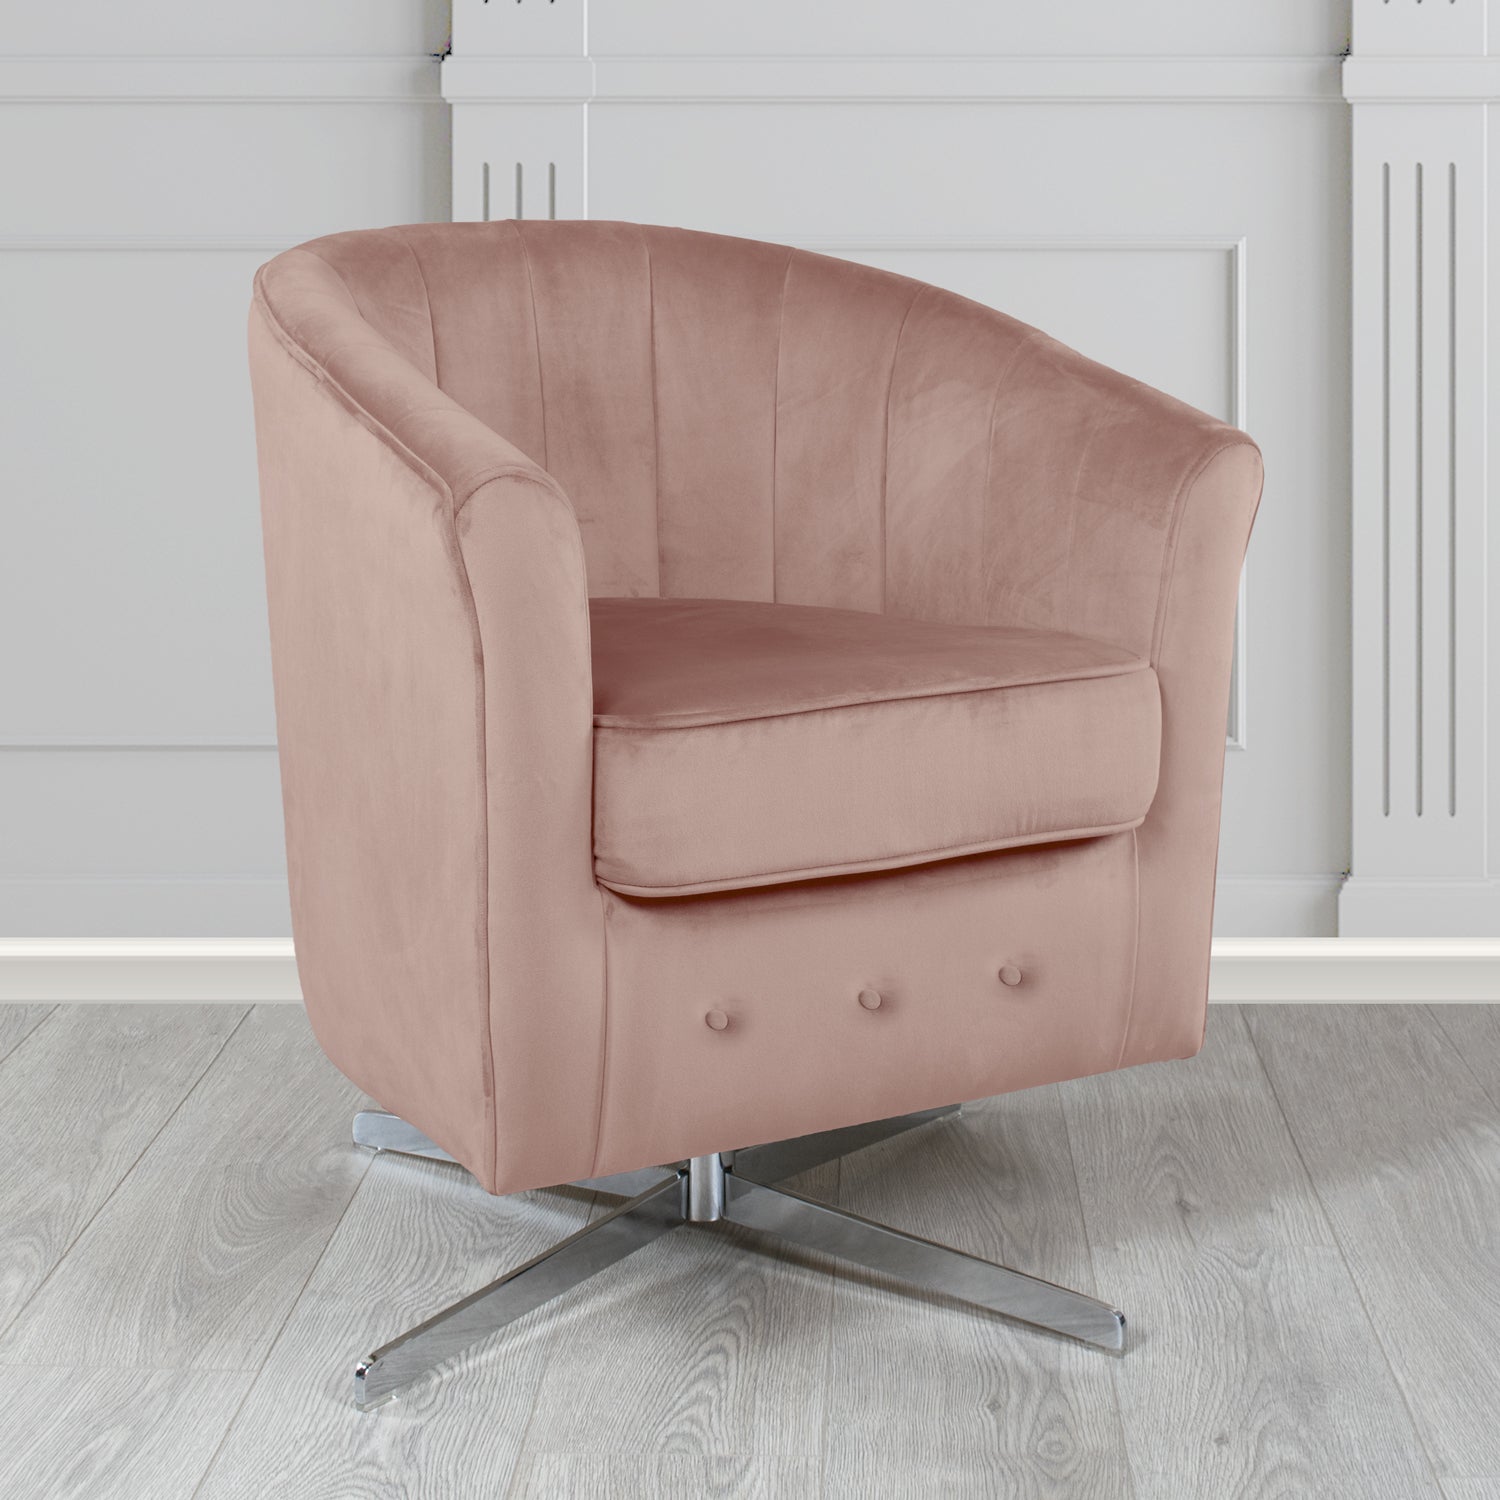 Doha Monaco Heather Plain Velvet Fabric Swivel Tub Chair - The Tub Chair Shop